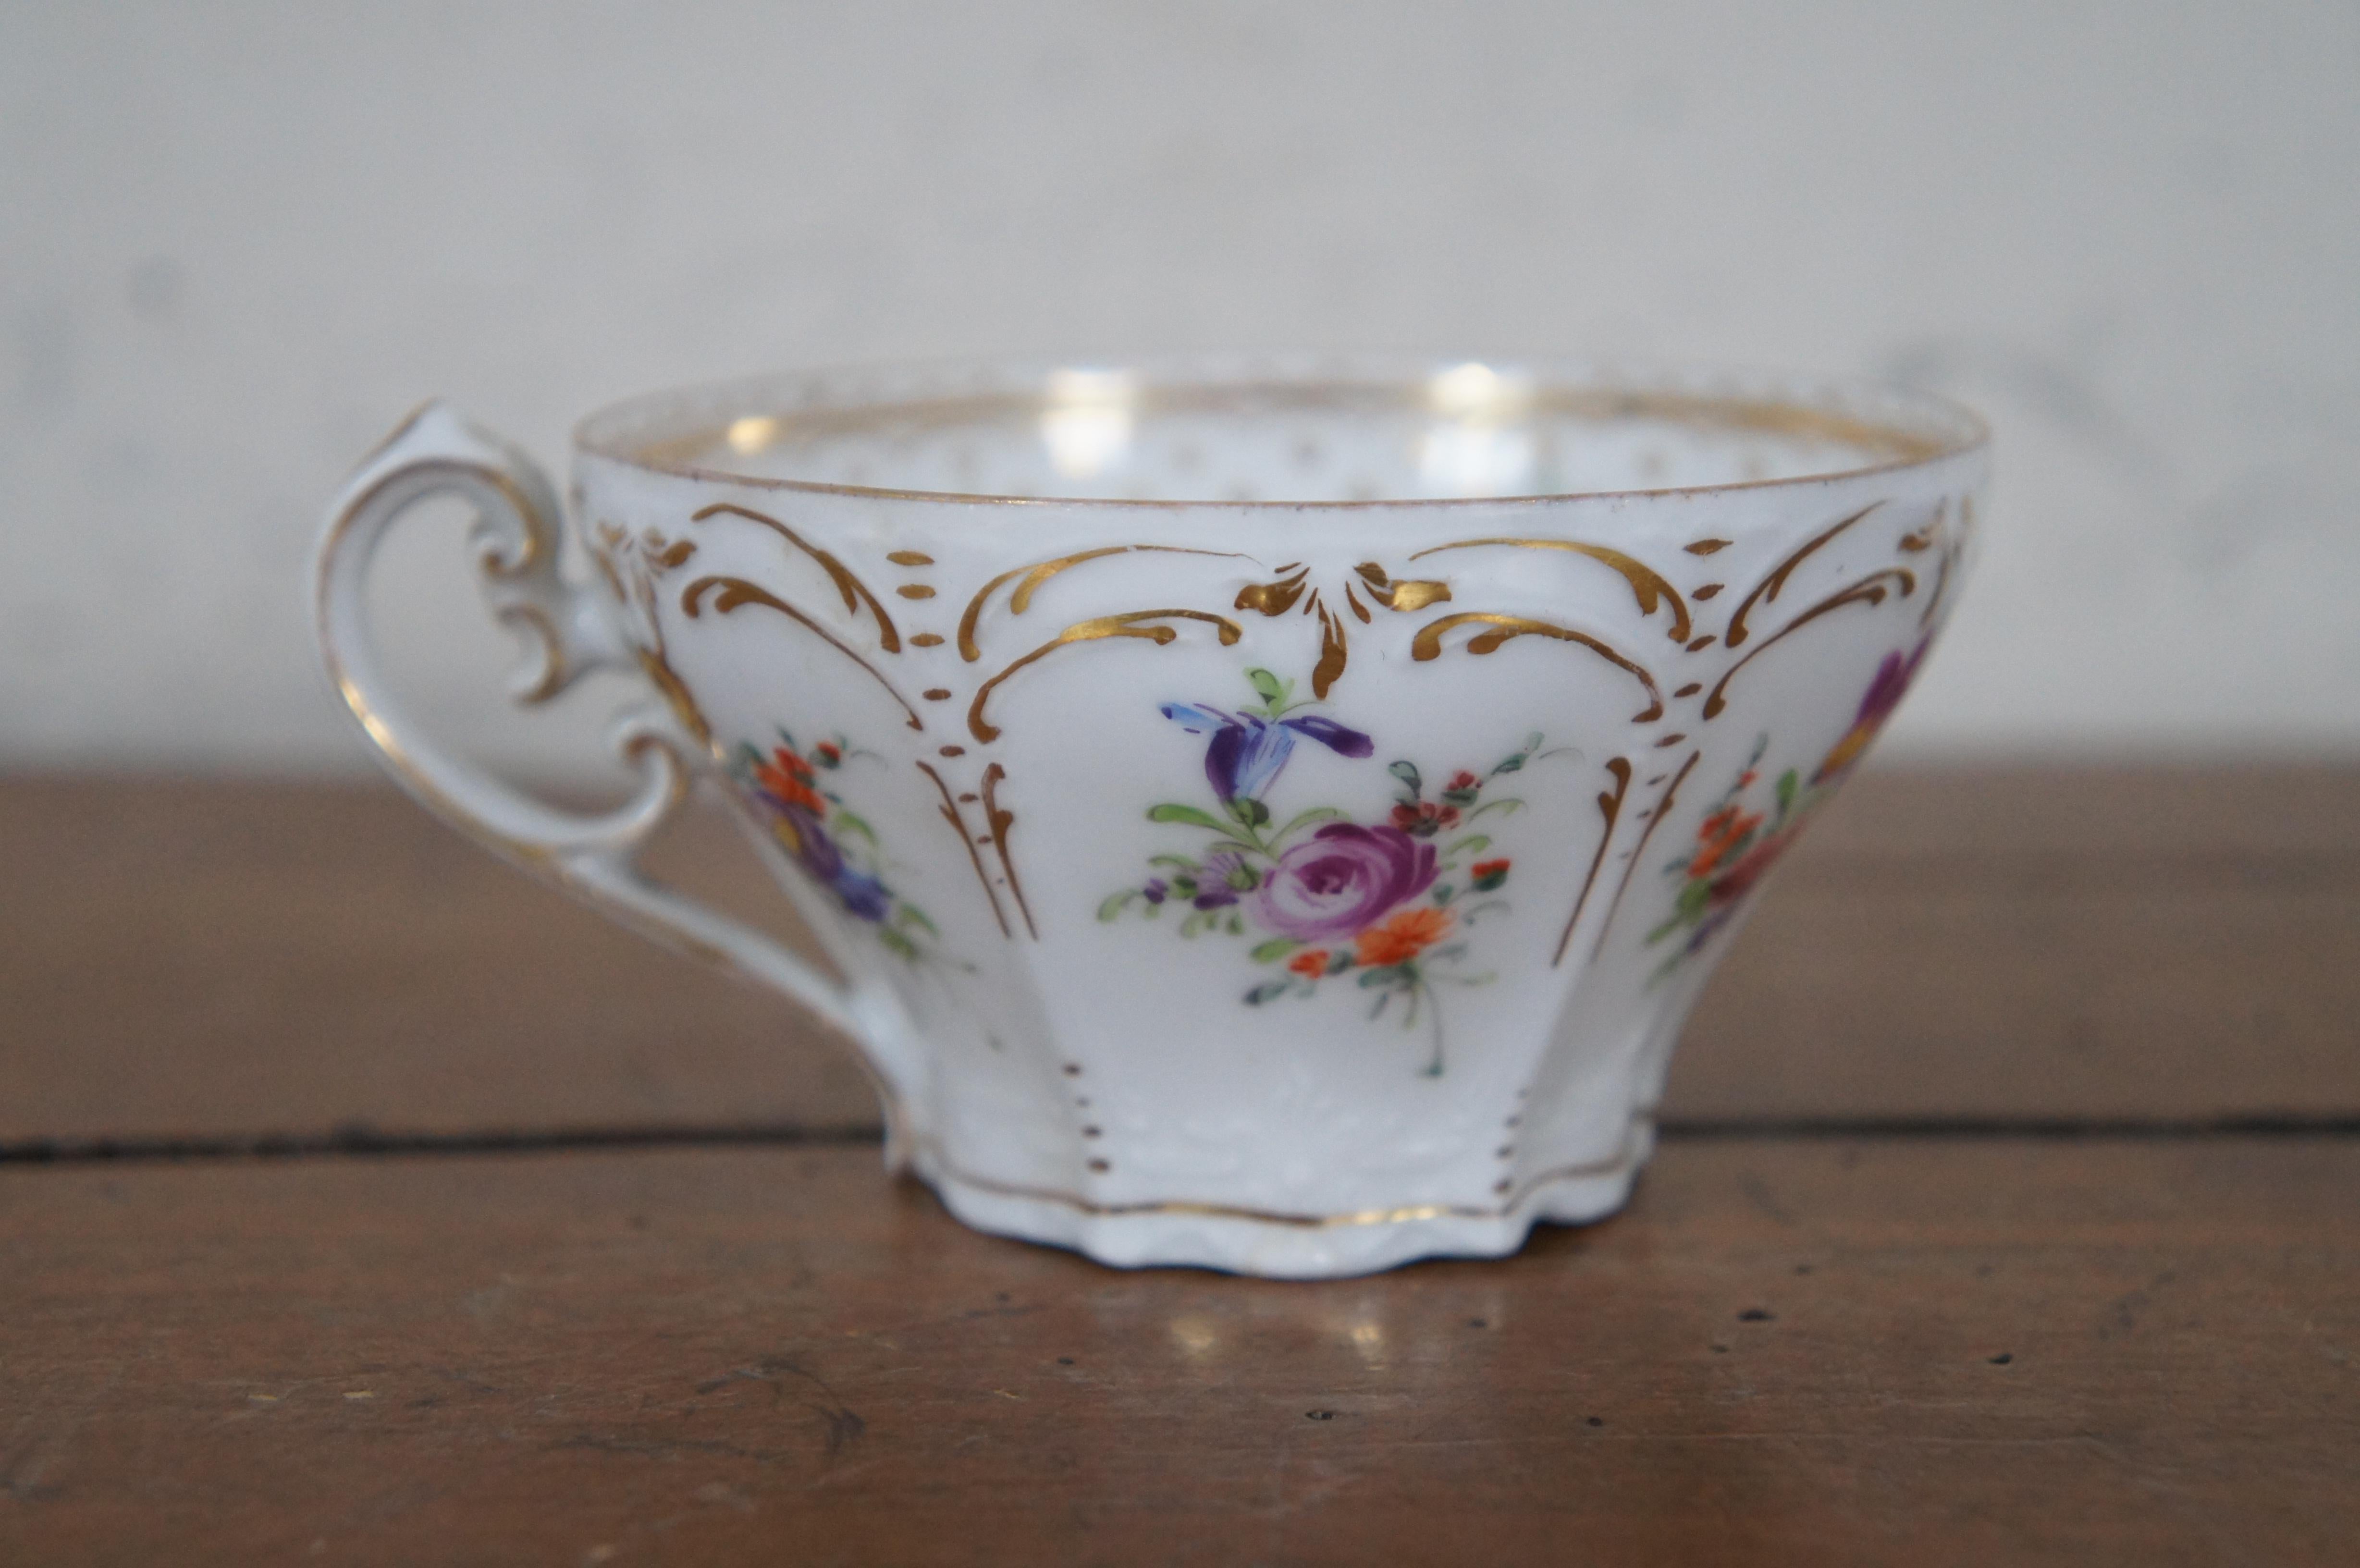 Antique Hirsch Dresden Polychrome Porcelain Teacup & Saucer Roses Flowers  5